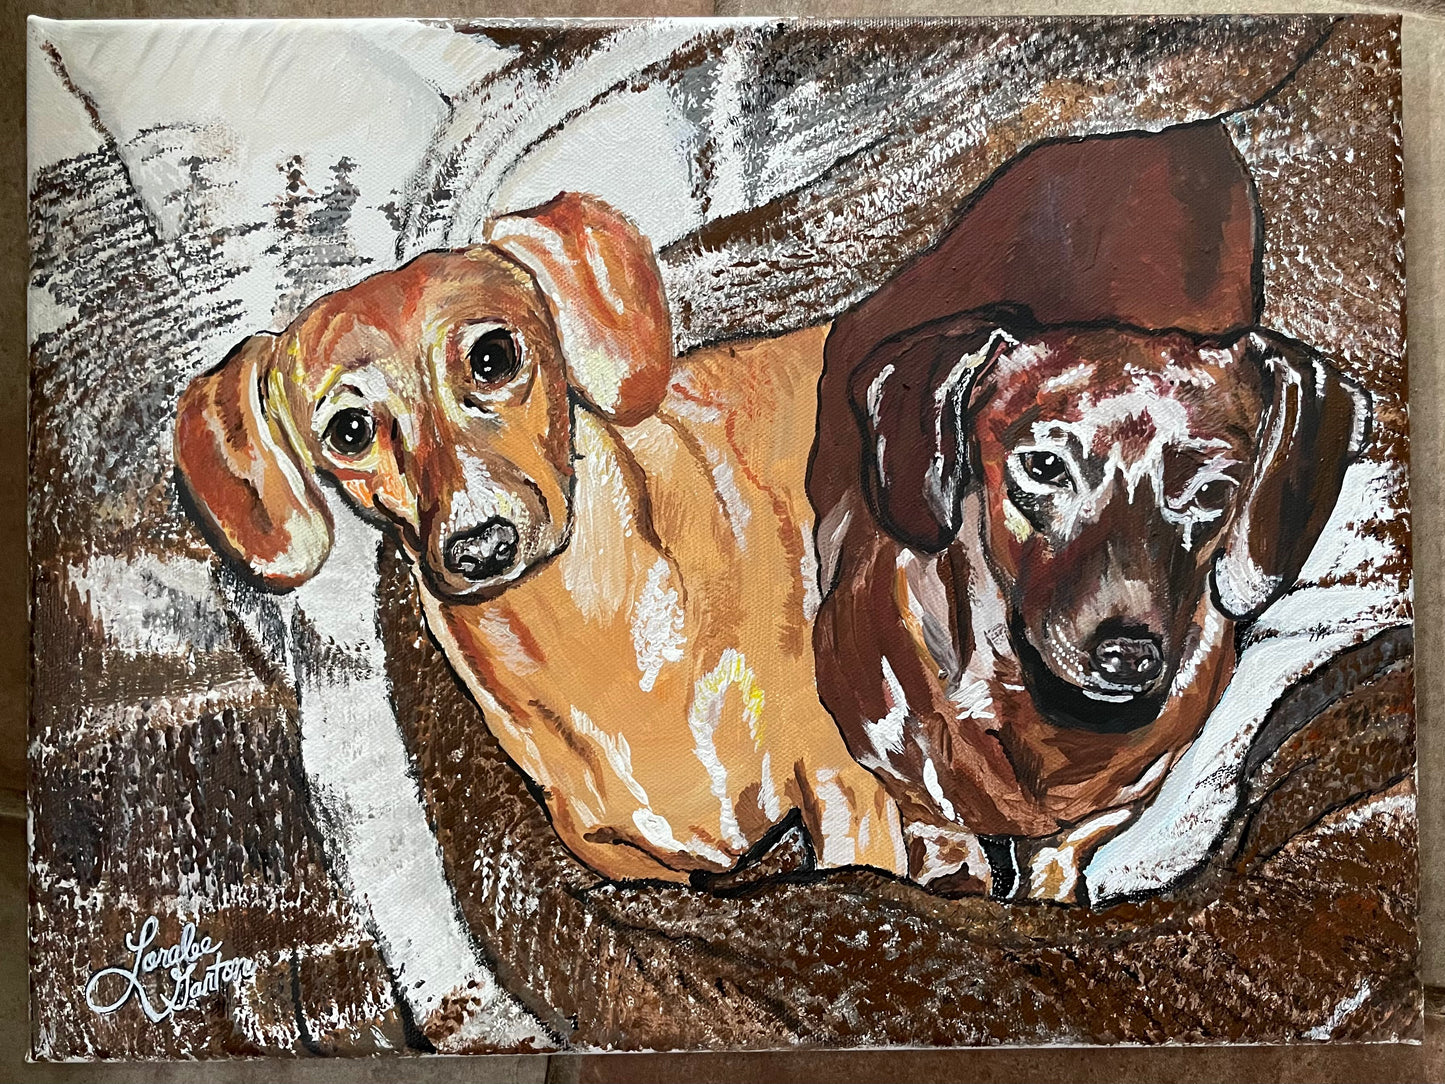 Custom Painted Pet Portrait on 8x8 Canvas